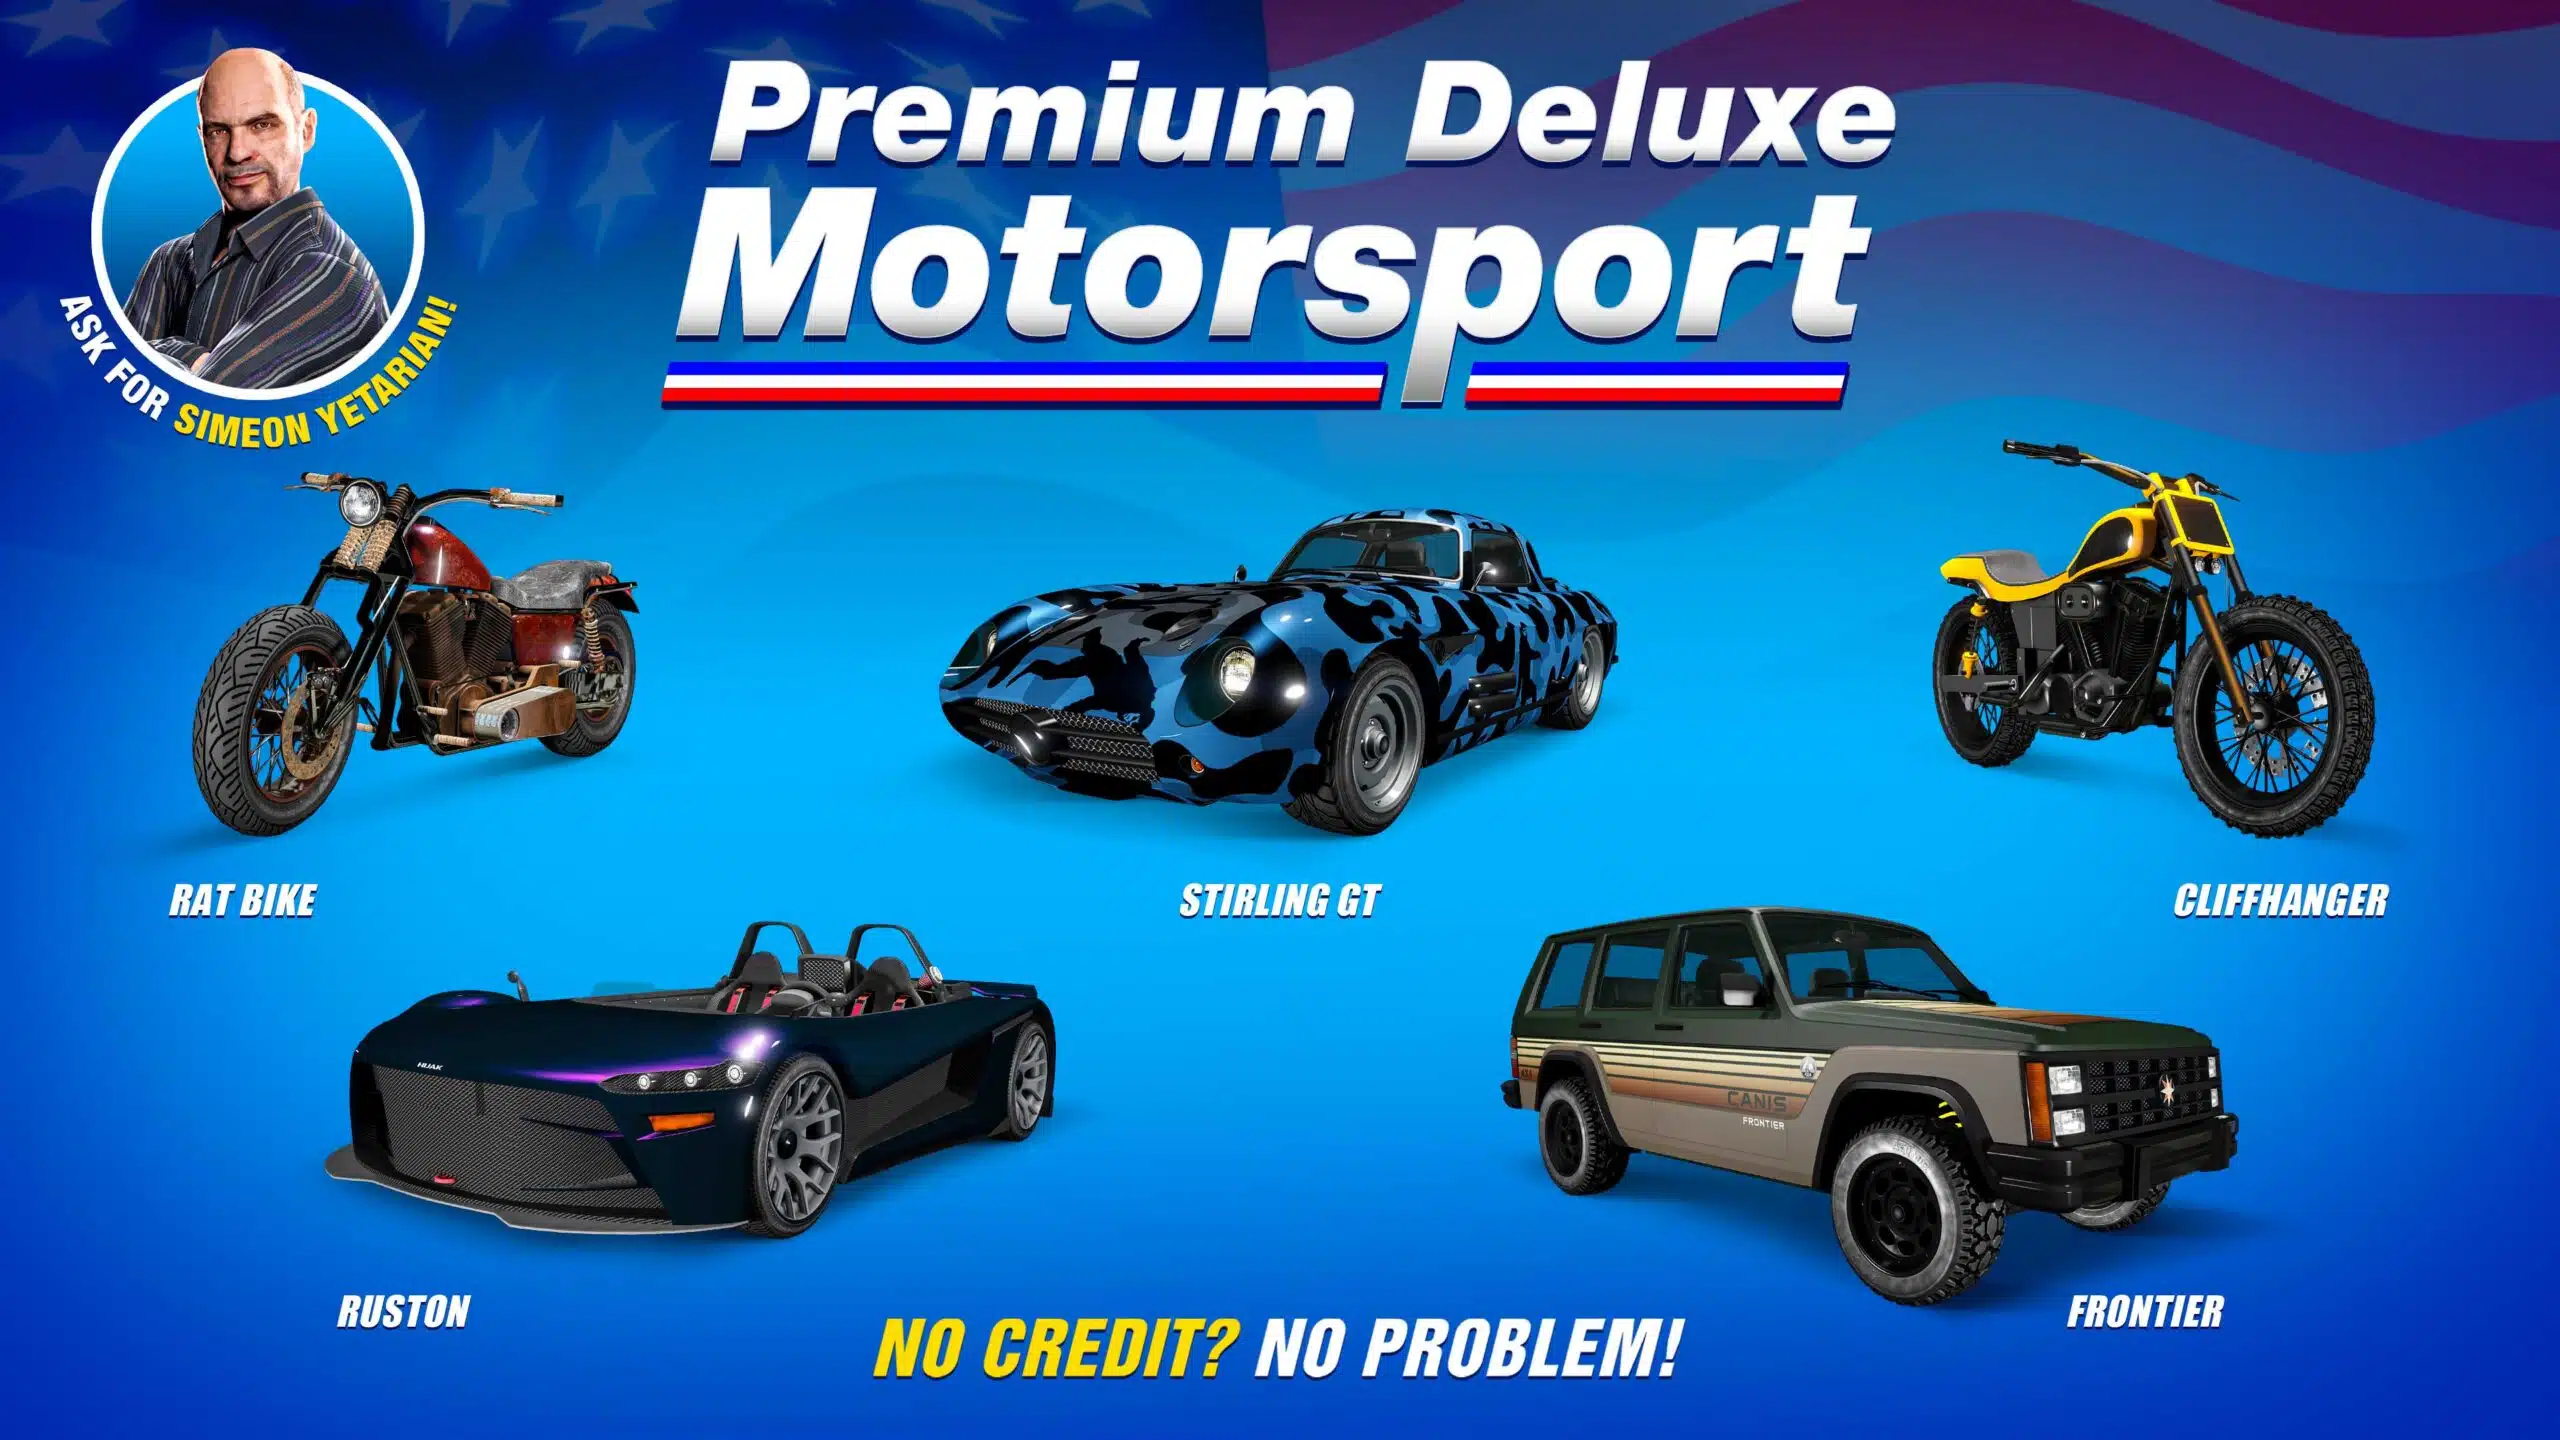 Premium Deluxe GTA Online descontos em carros